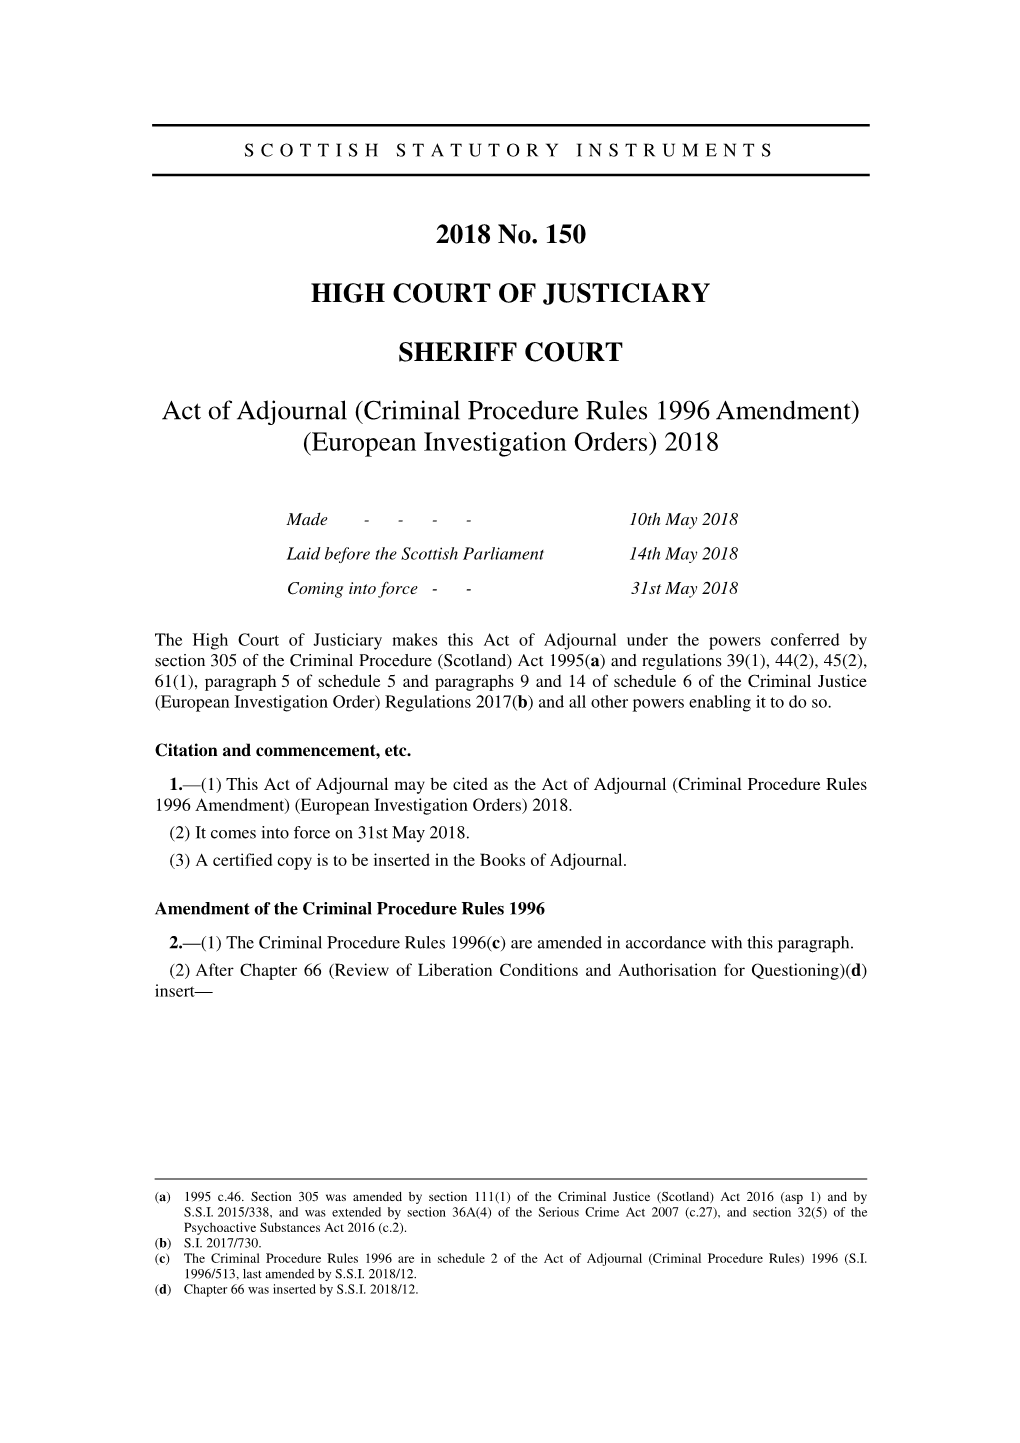 Act of Adjournal (Criminal Procedure Rules 1996 Amendment) (European Investigation Orders) 2018